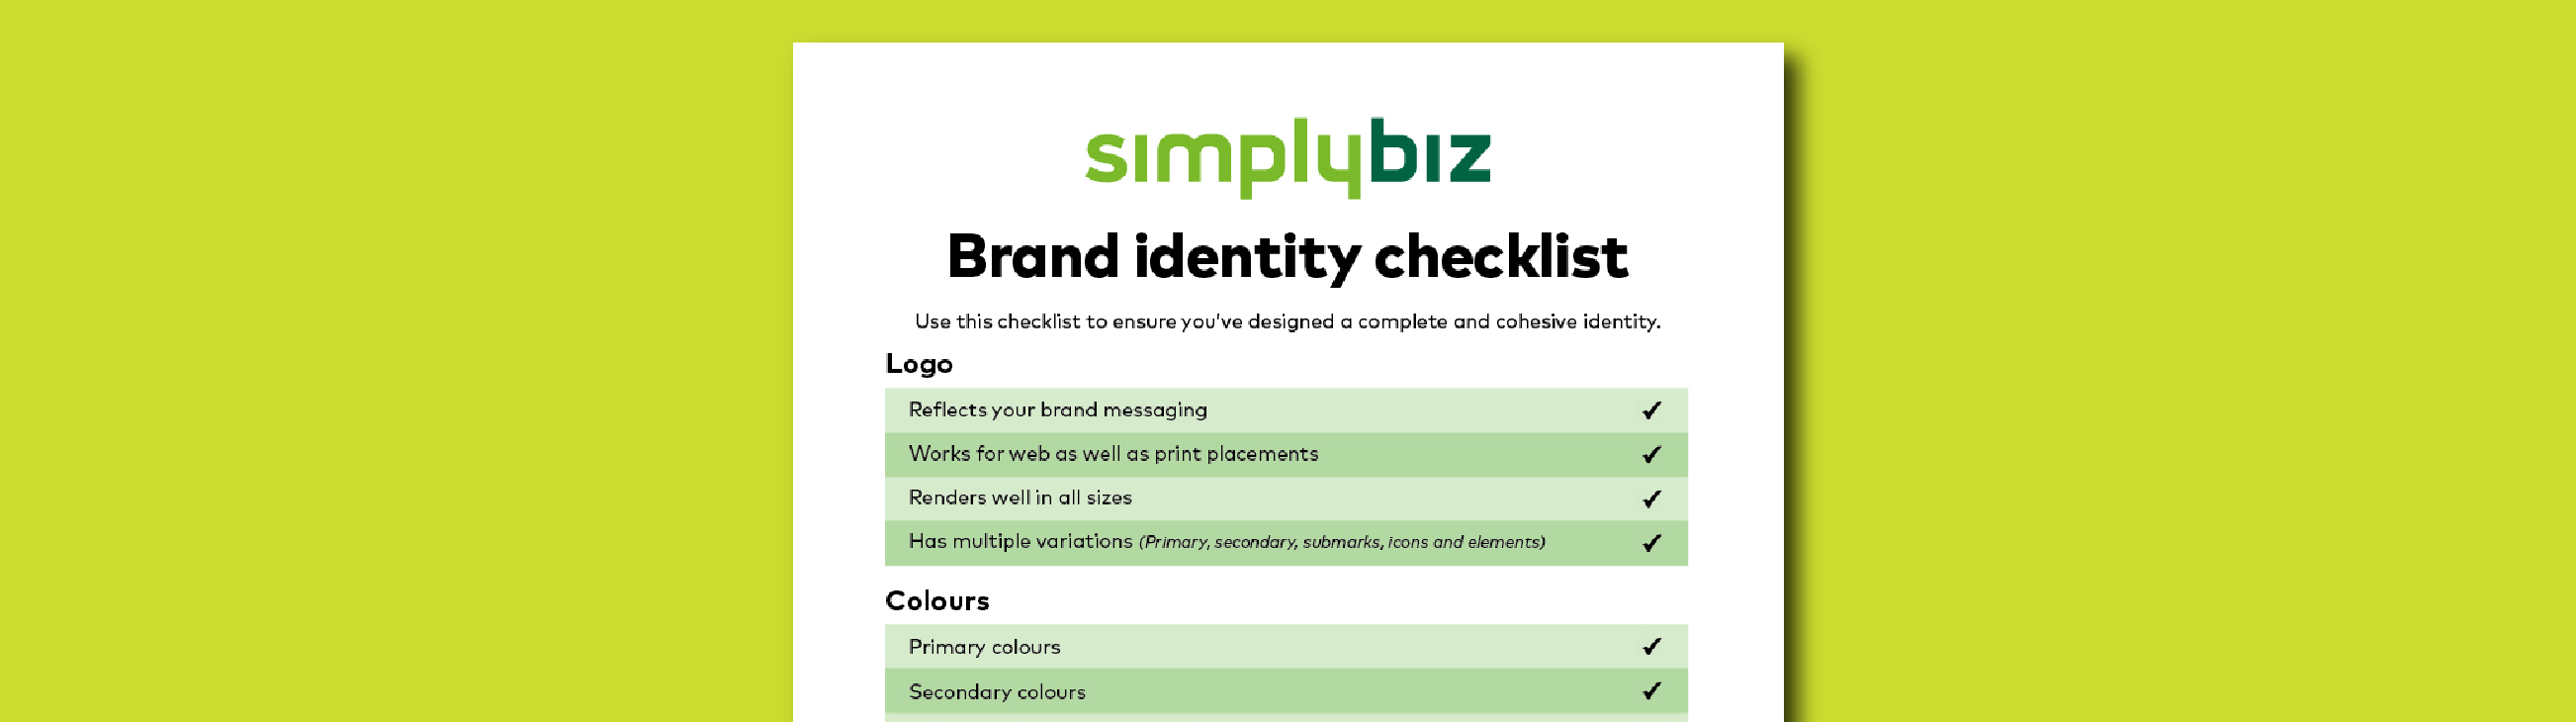 Brand_checklist_W.png